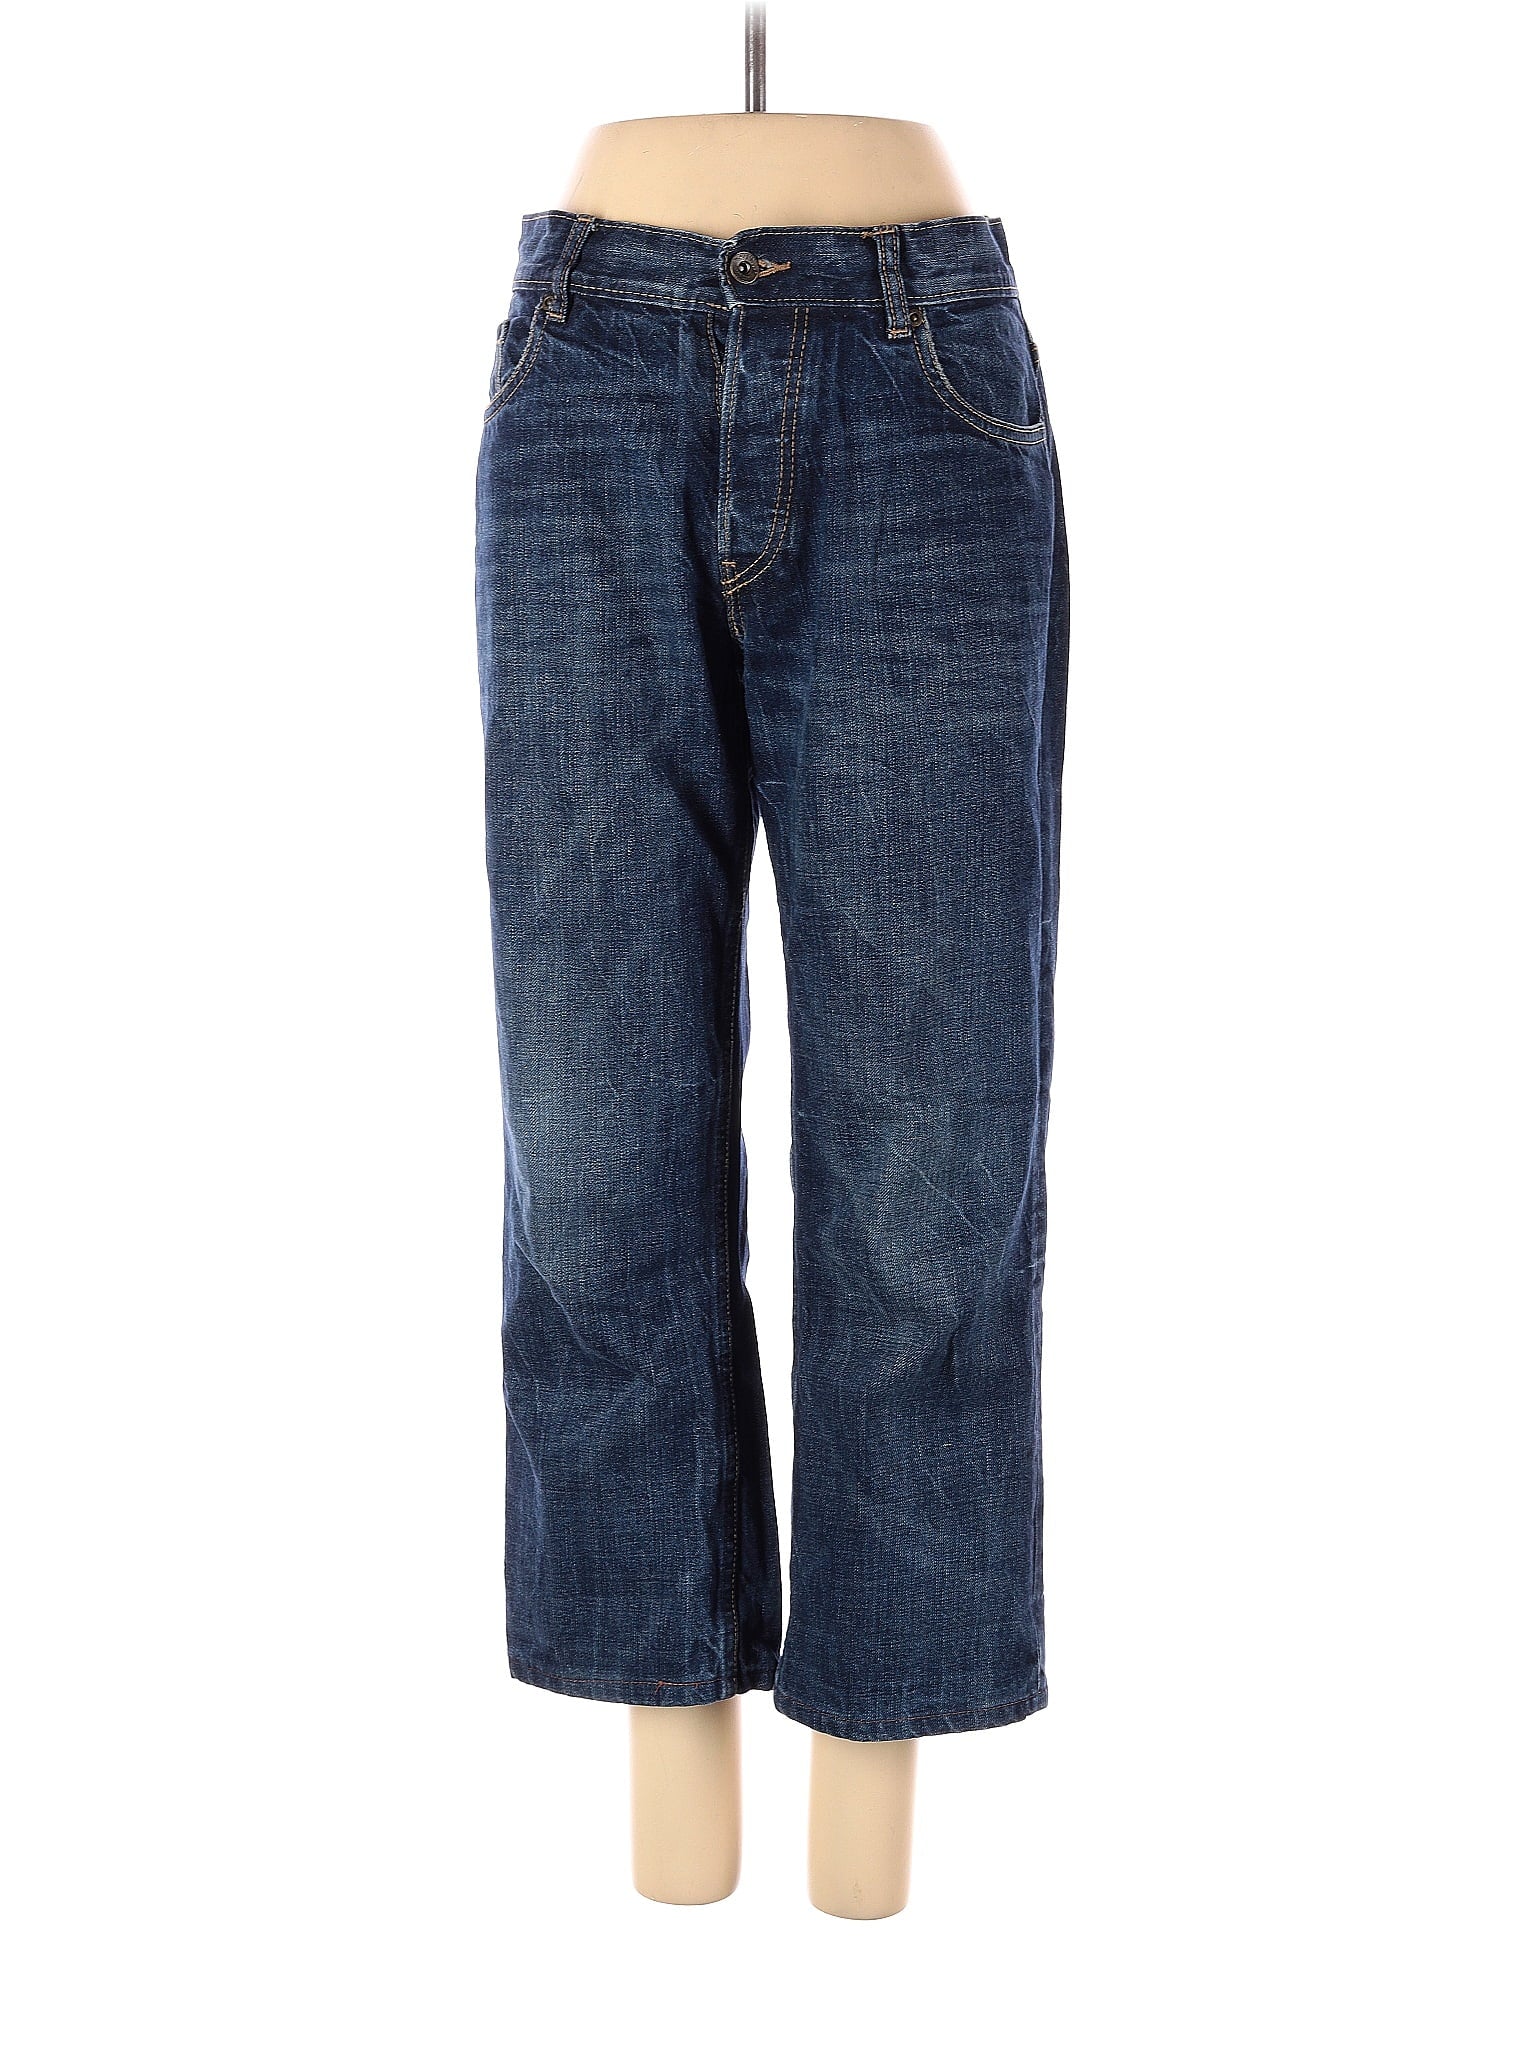 Jeans size - 32 (EU)